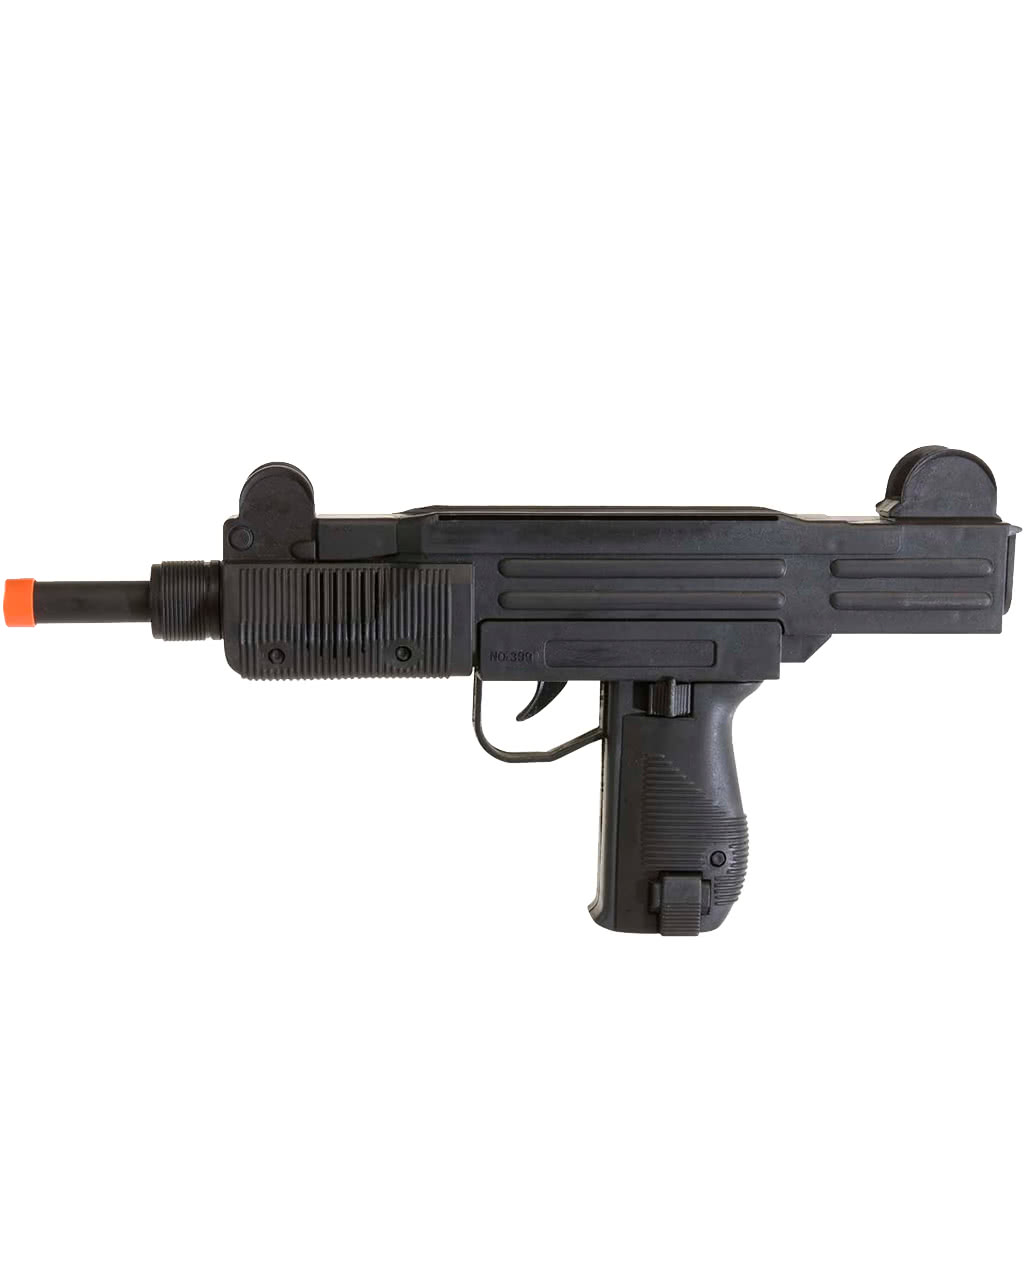 a toy gun